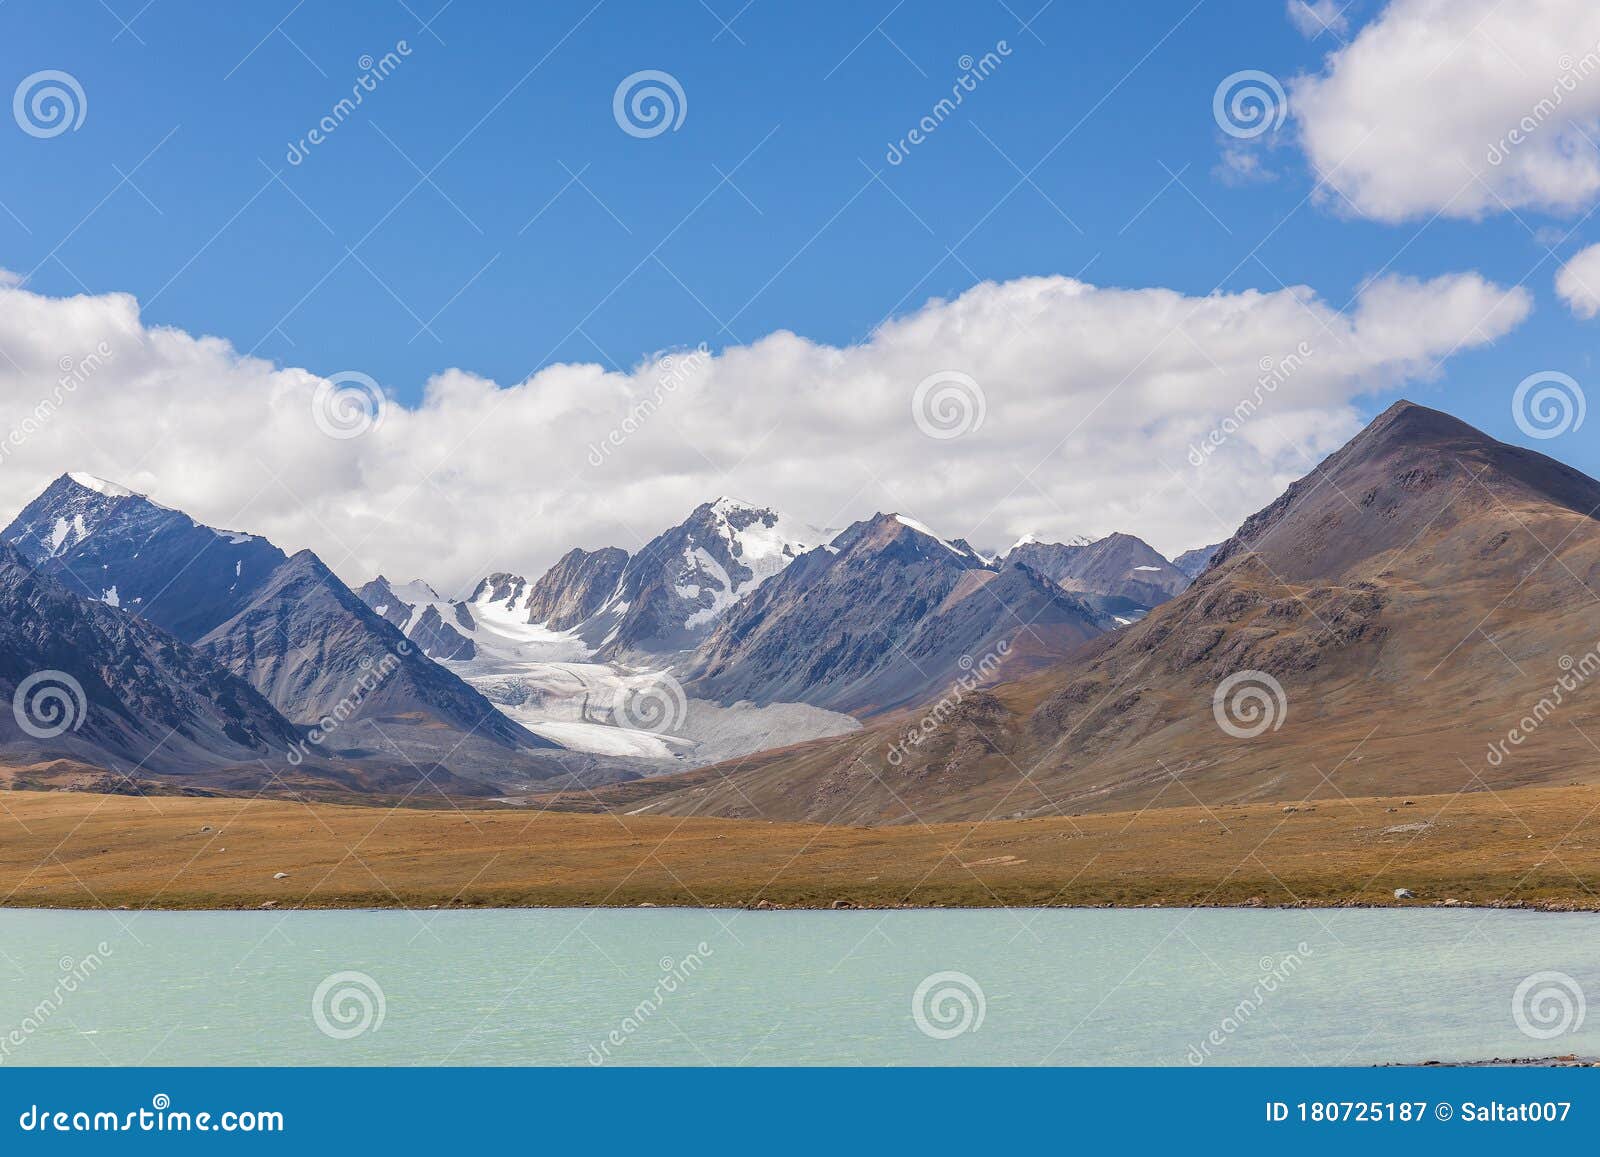 western mongolia mountainous landscape. view at tsaagan gol river, white river. altai tavan bogd national park, bayan-ulgii